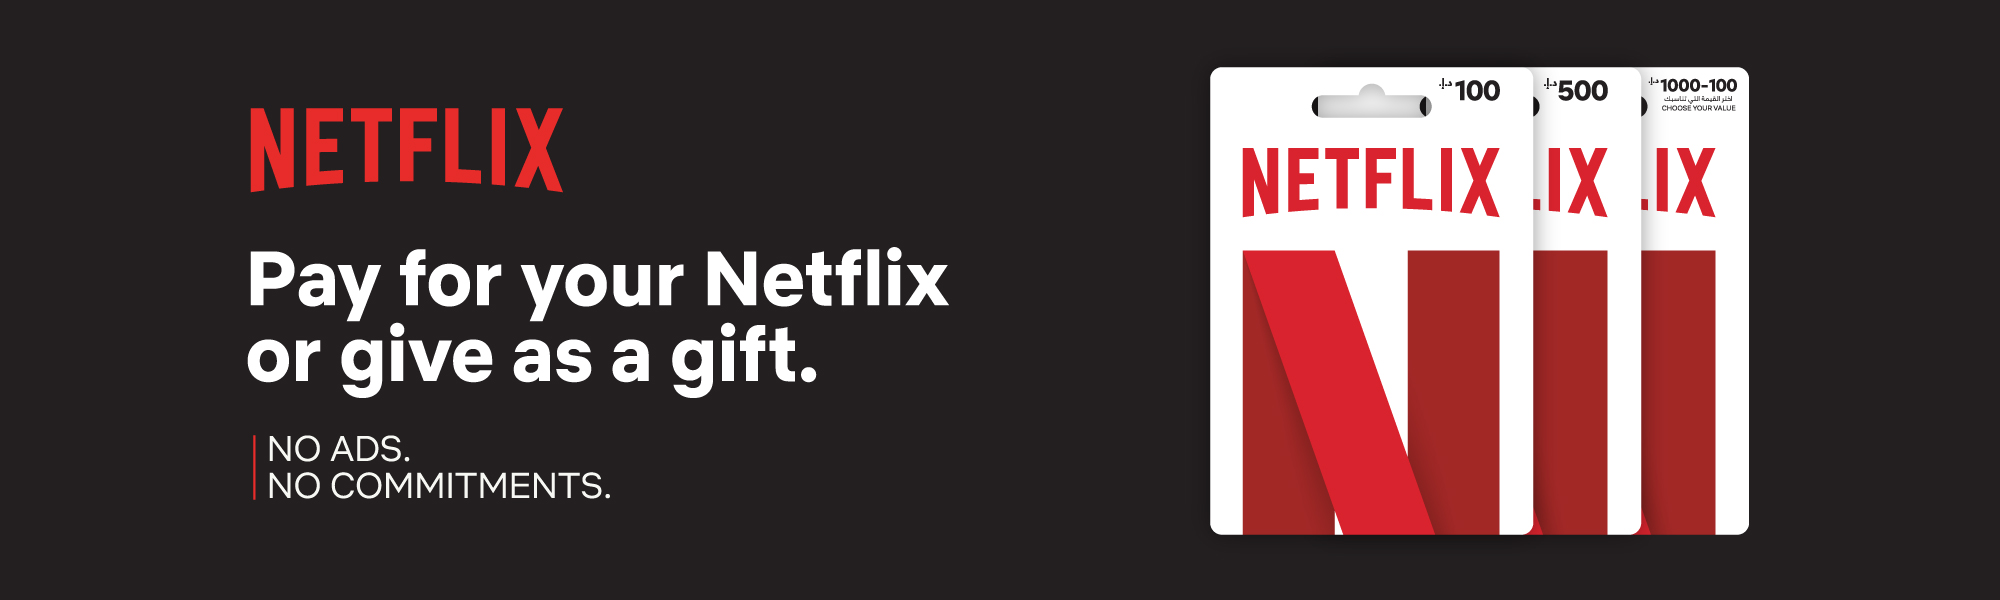 Netflix gift card  Buy Netflix gift card  DG Help Services  Service arm  of Sharaf DG